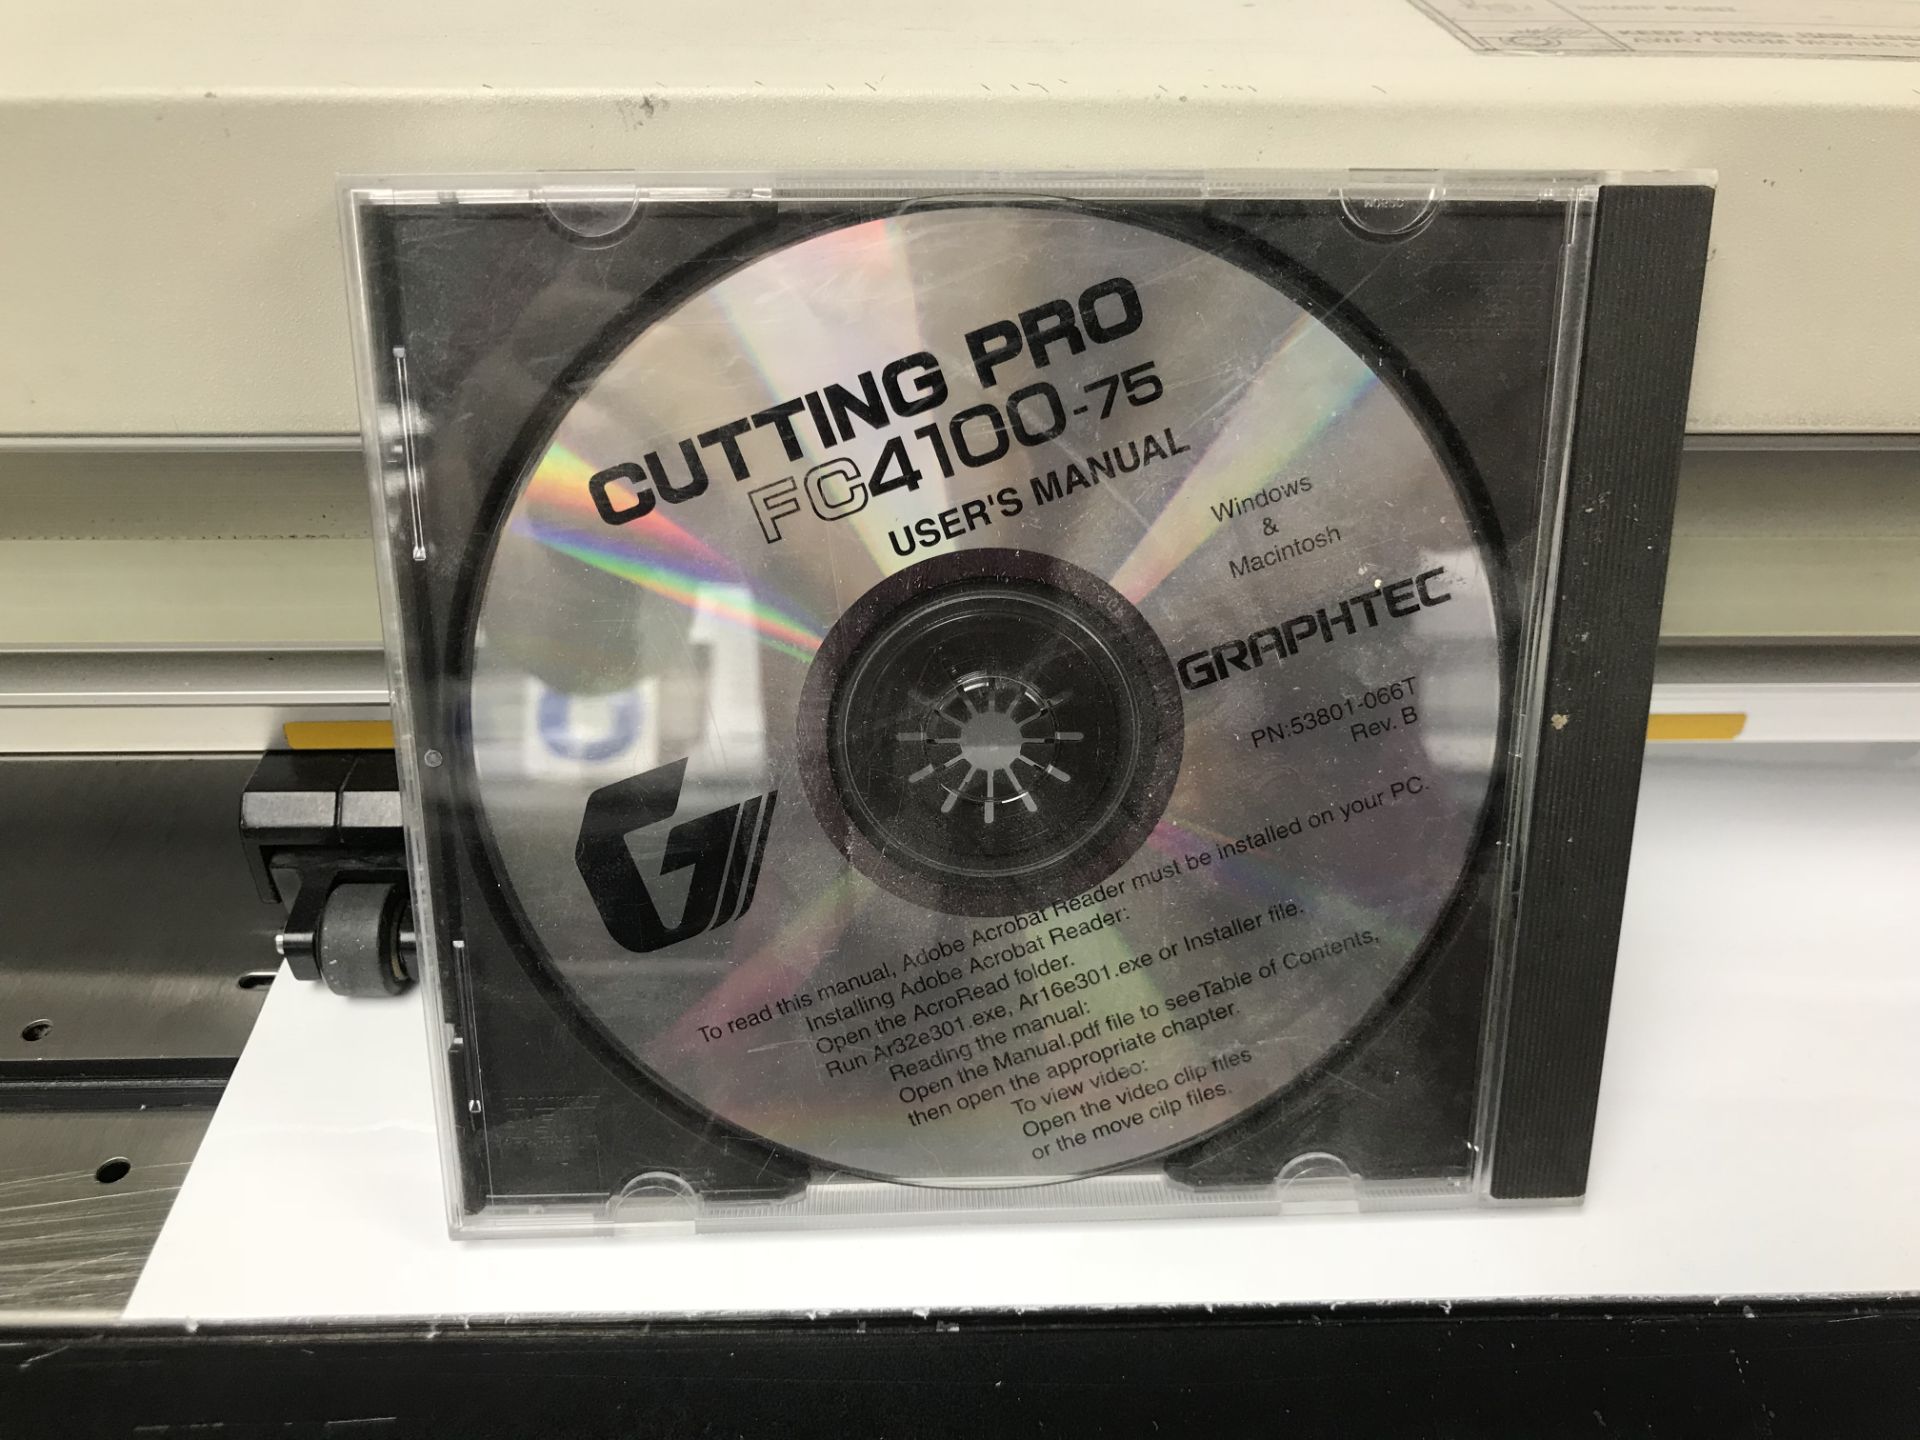 Graphtec FC4100-75 Cutting Pro Vinyl Cutter w/ CD User Manual - Image 2 of 6